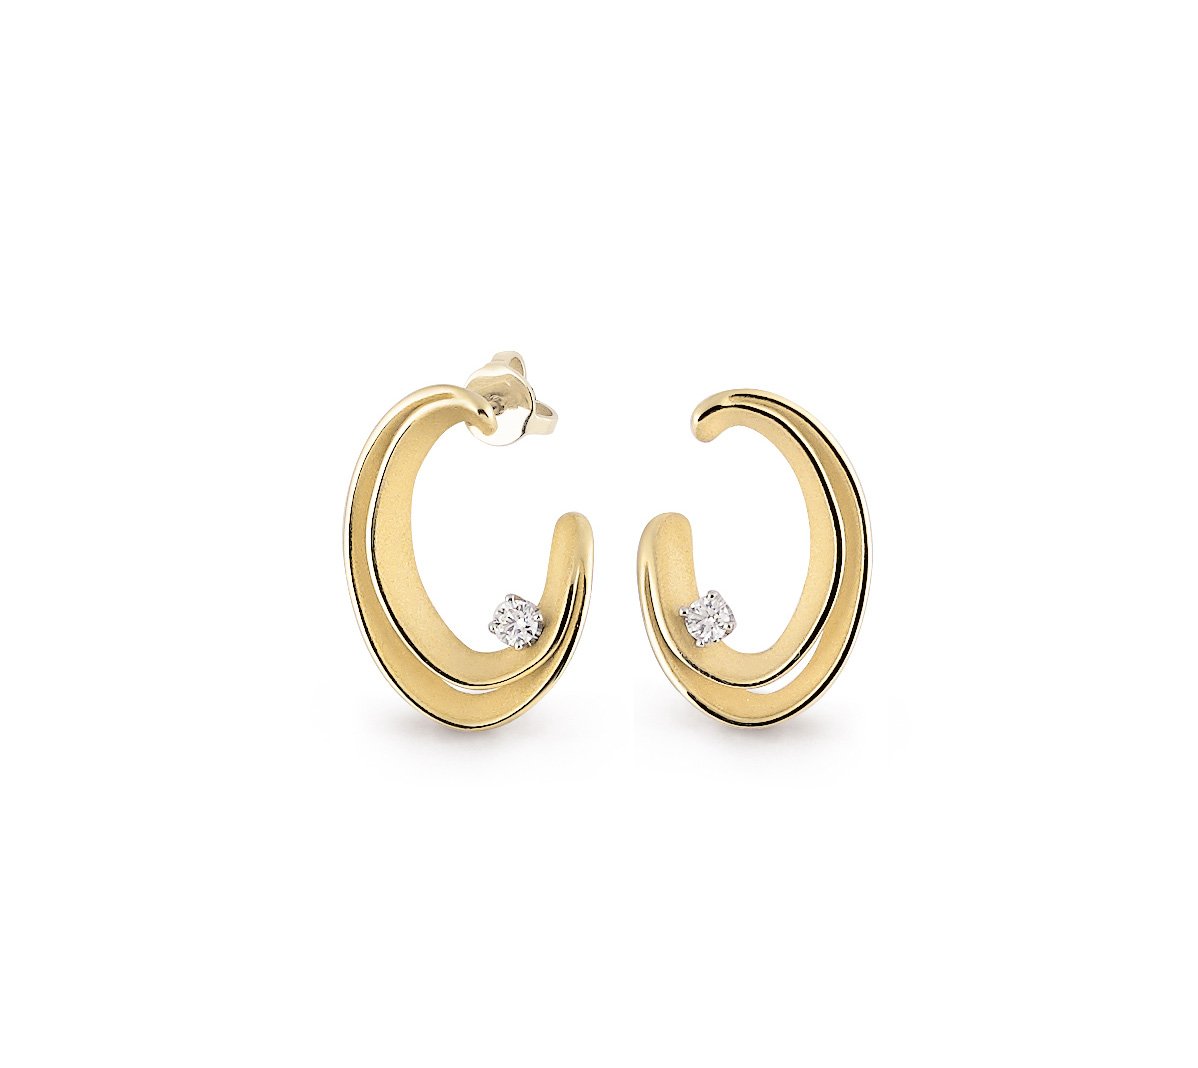 Annamaria Cammilli "Dune" 18kt Sunrise Yellow Gold Diamond Earrings 